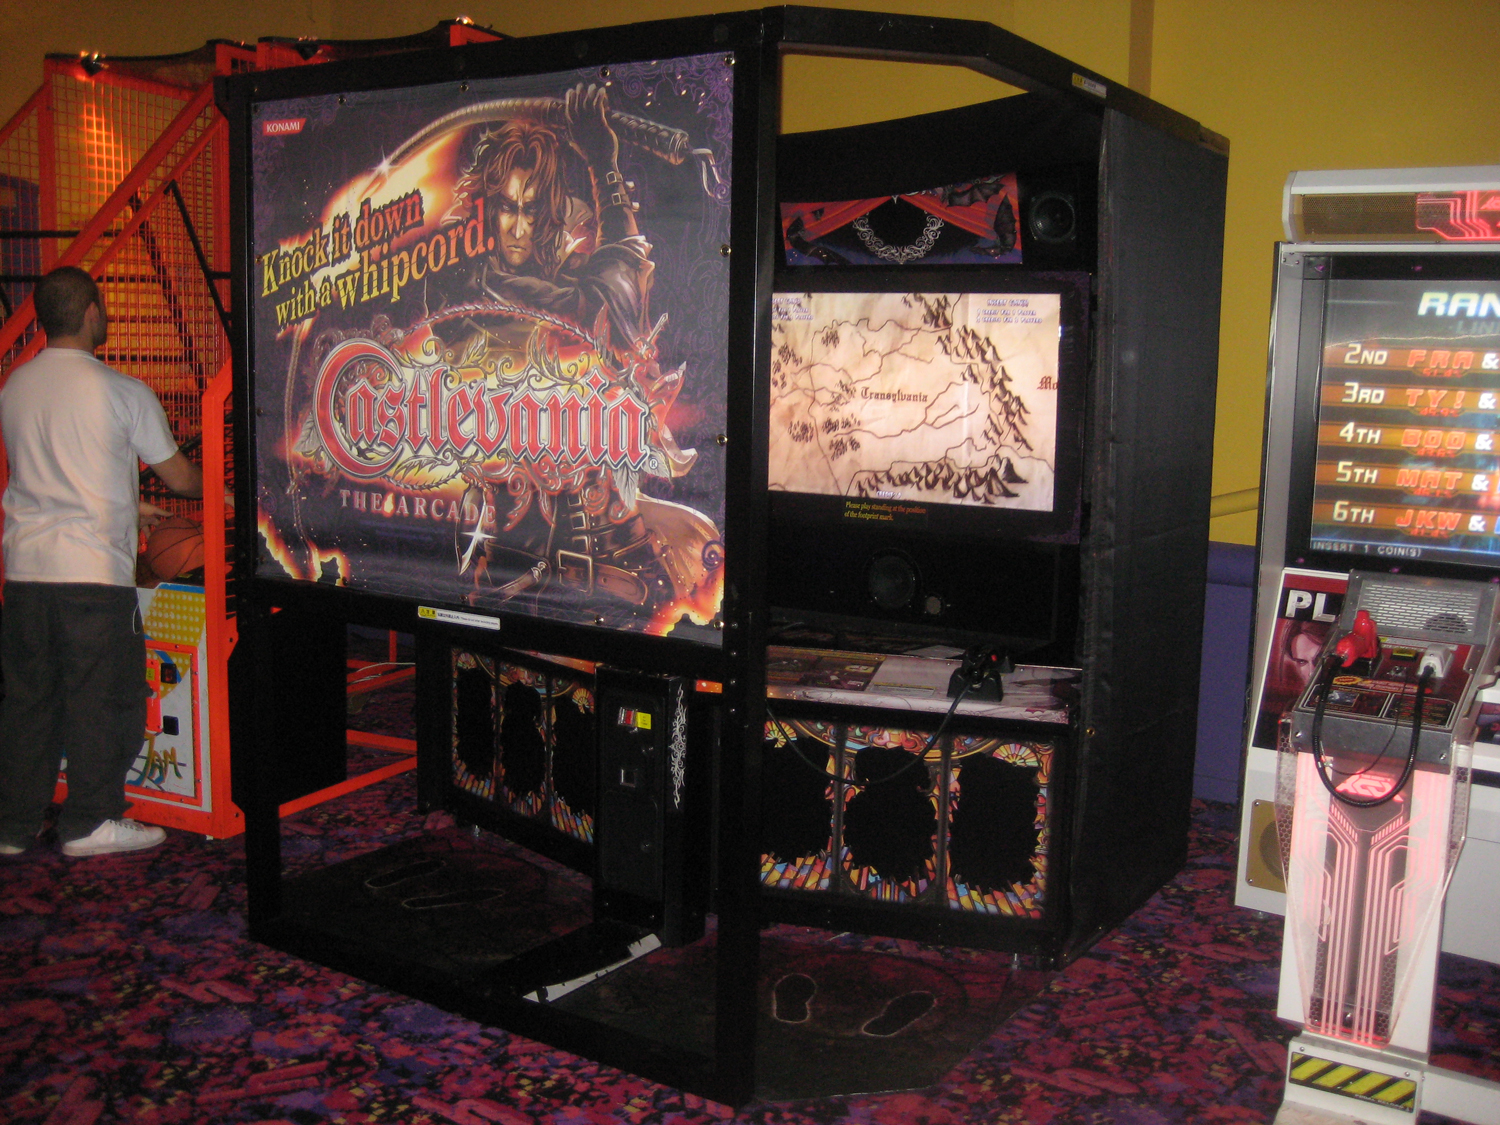 video game spinoffs - Castlevania: The Arcade photo